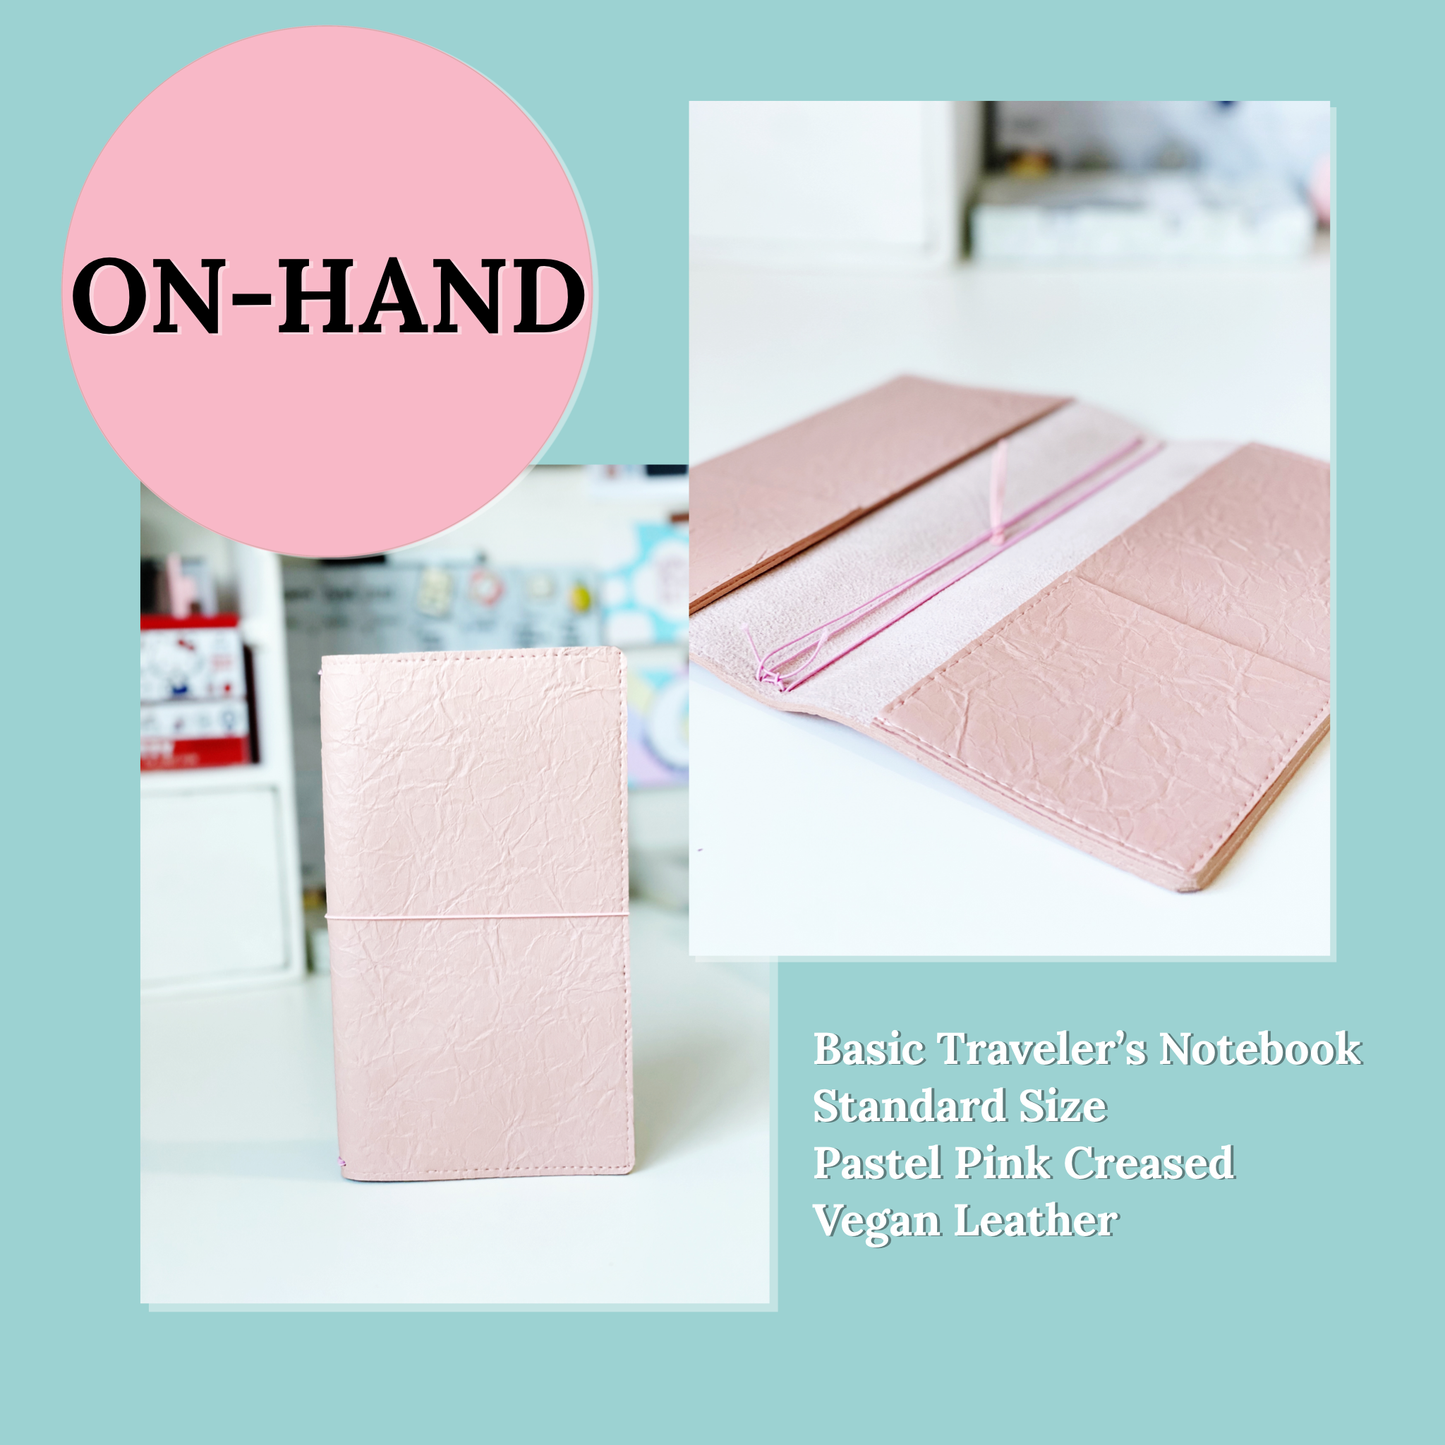 Standard Traveler's Notebook Cover in Pastel Pink